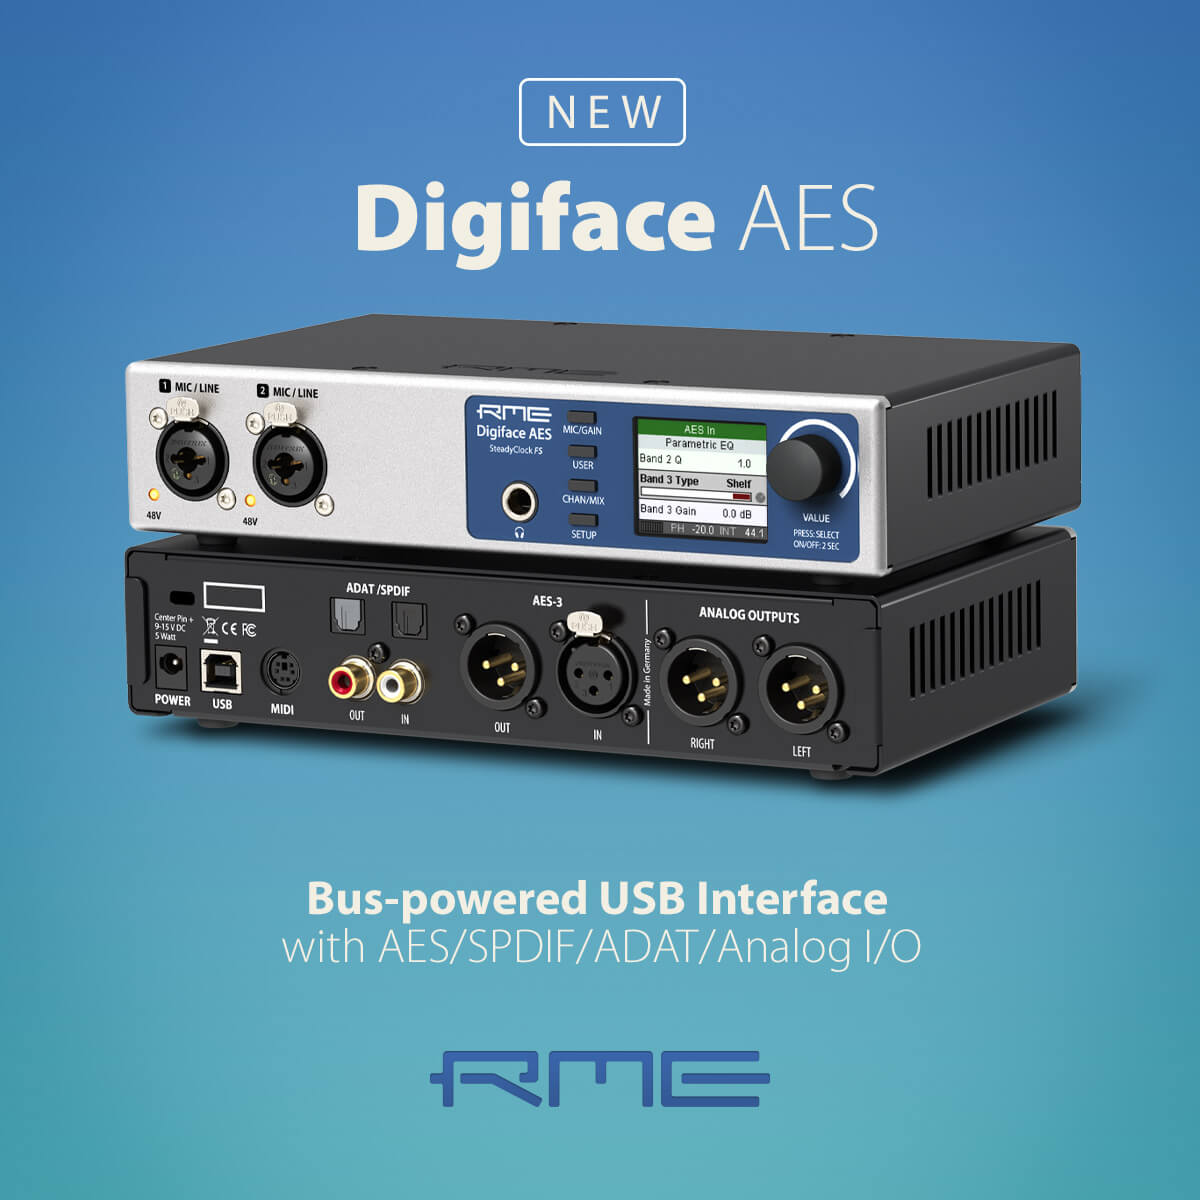 Az RME bemutatja a Digiface AES-t